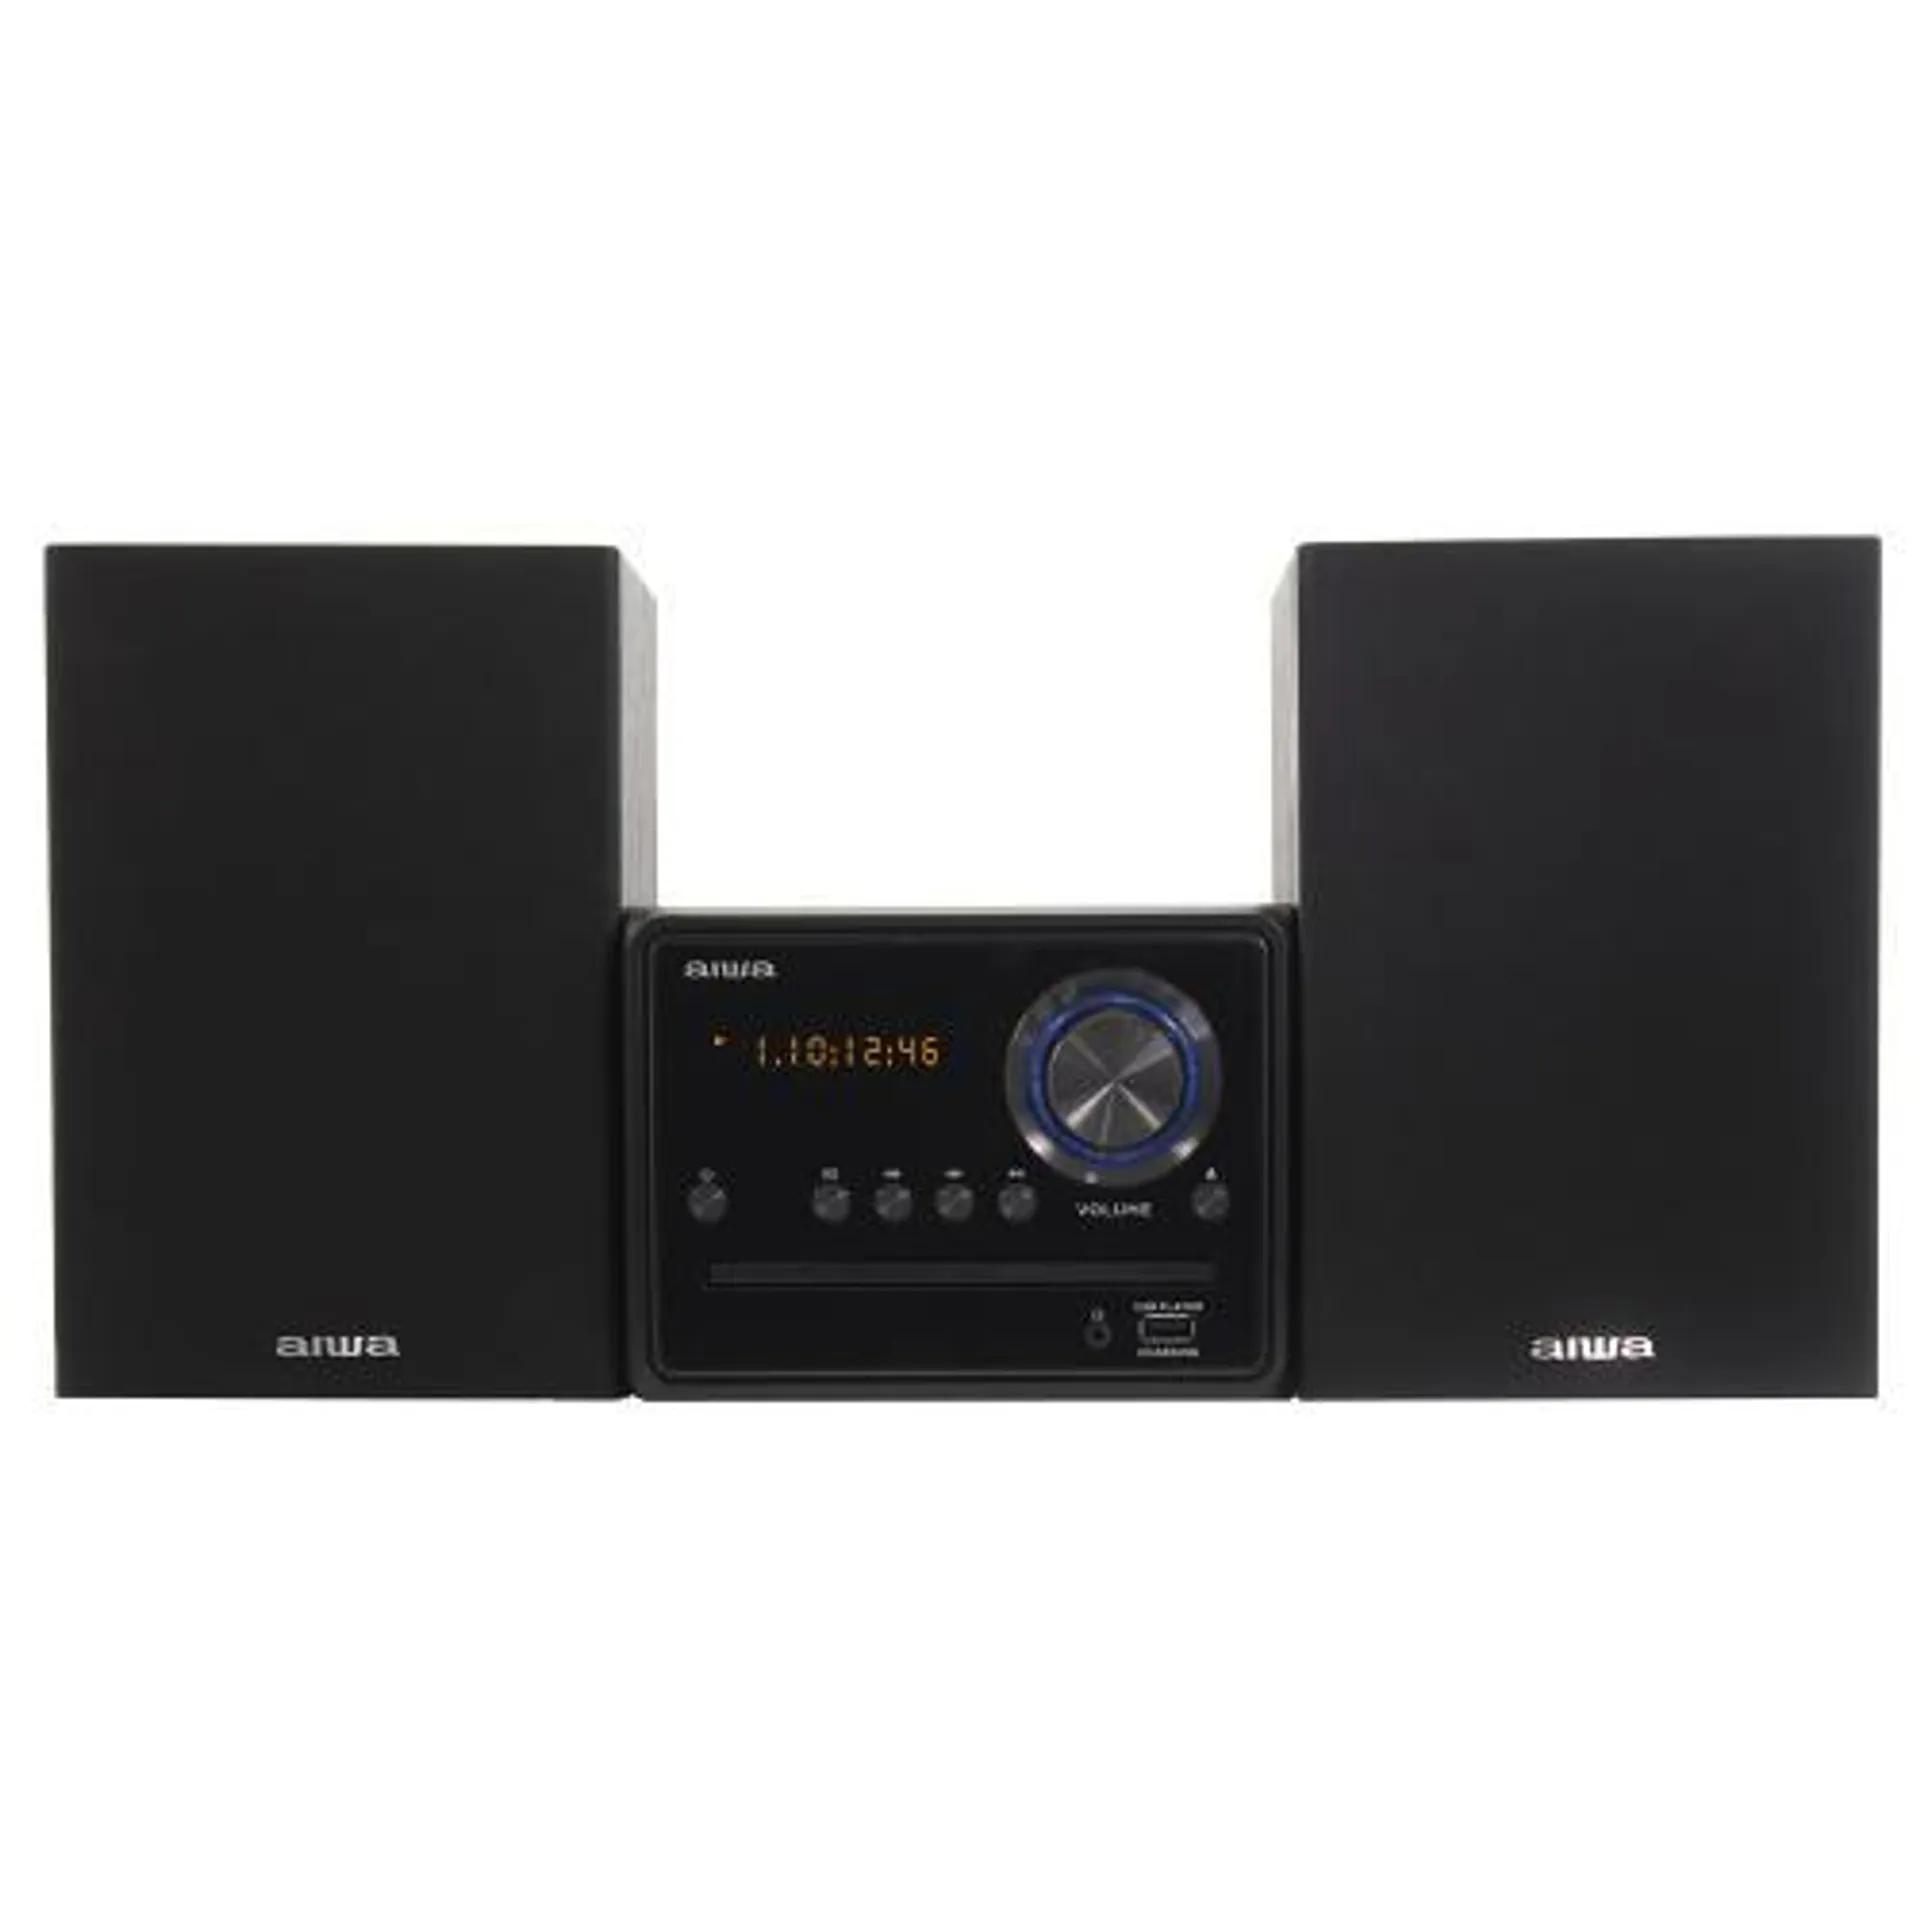 AIWA 20 WATT RADIO AND CD STEREO SYSTEM